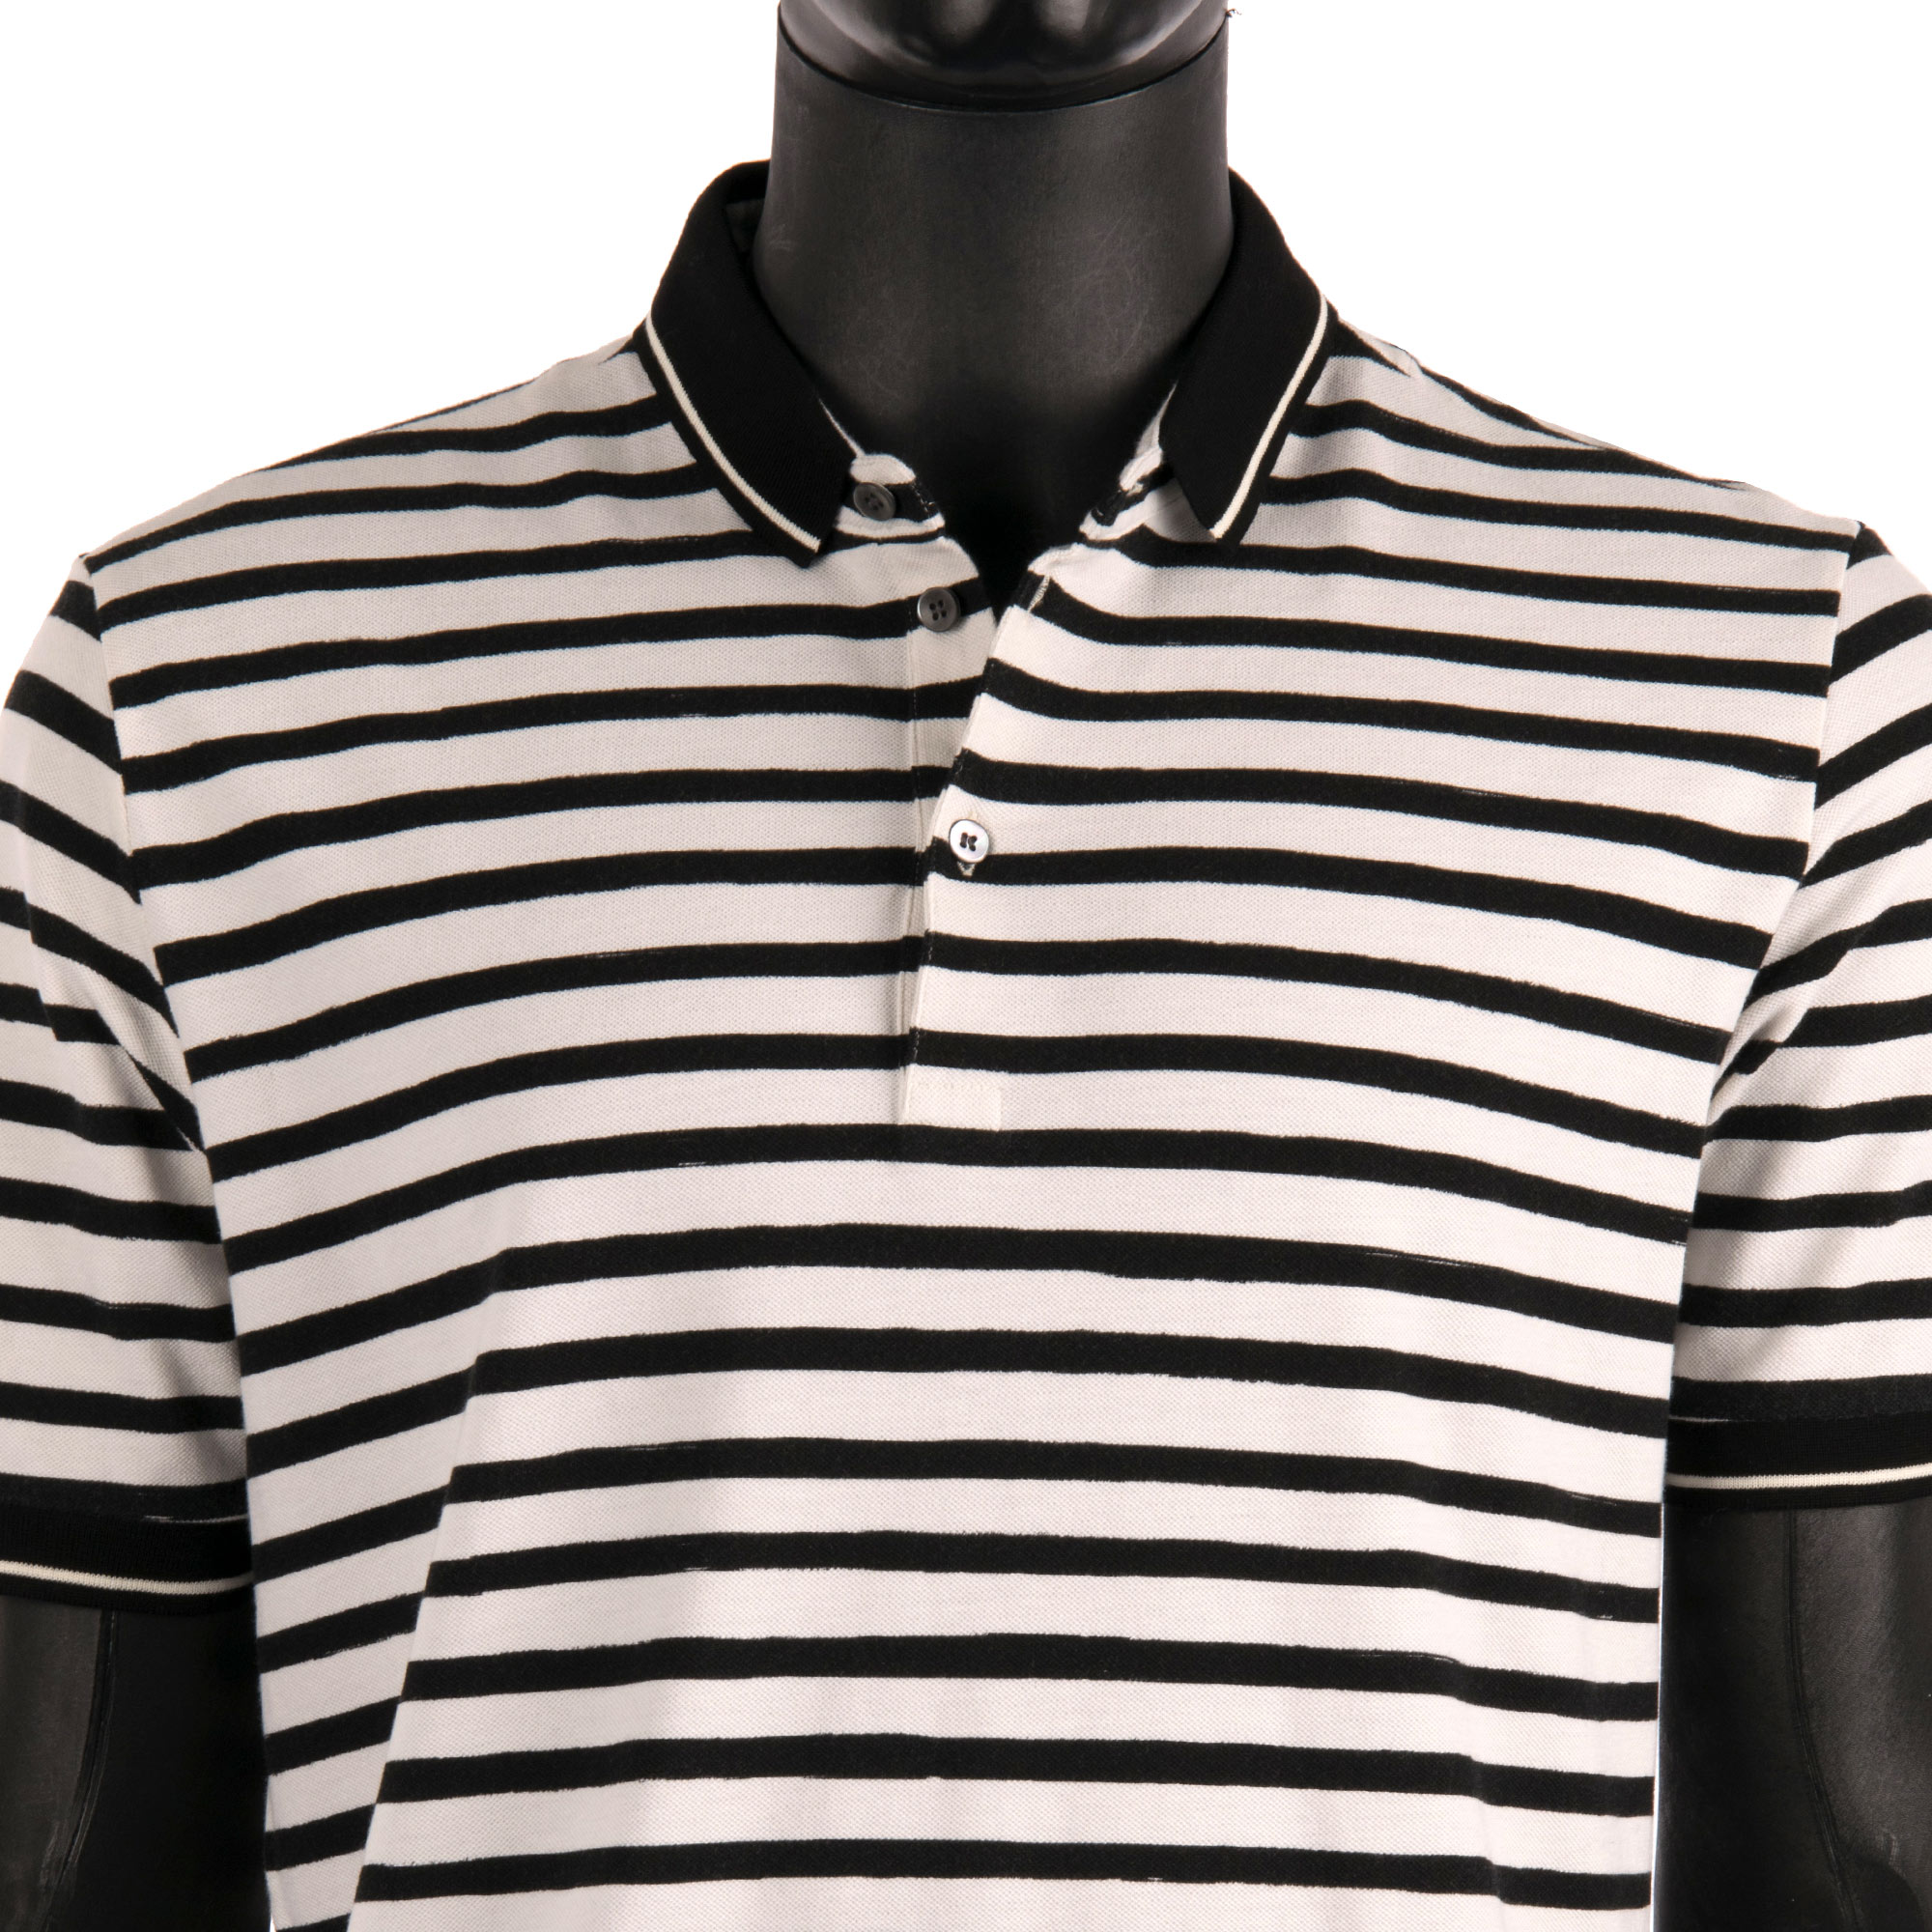 Dolce & Gabbana Striped Cotton Polo Shirt Black White | FASHION ROOMS